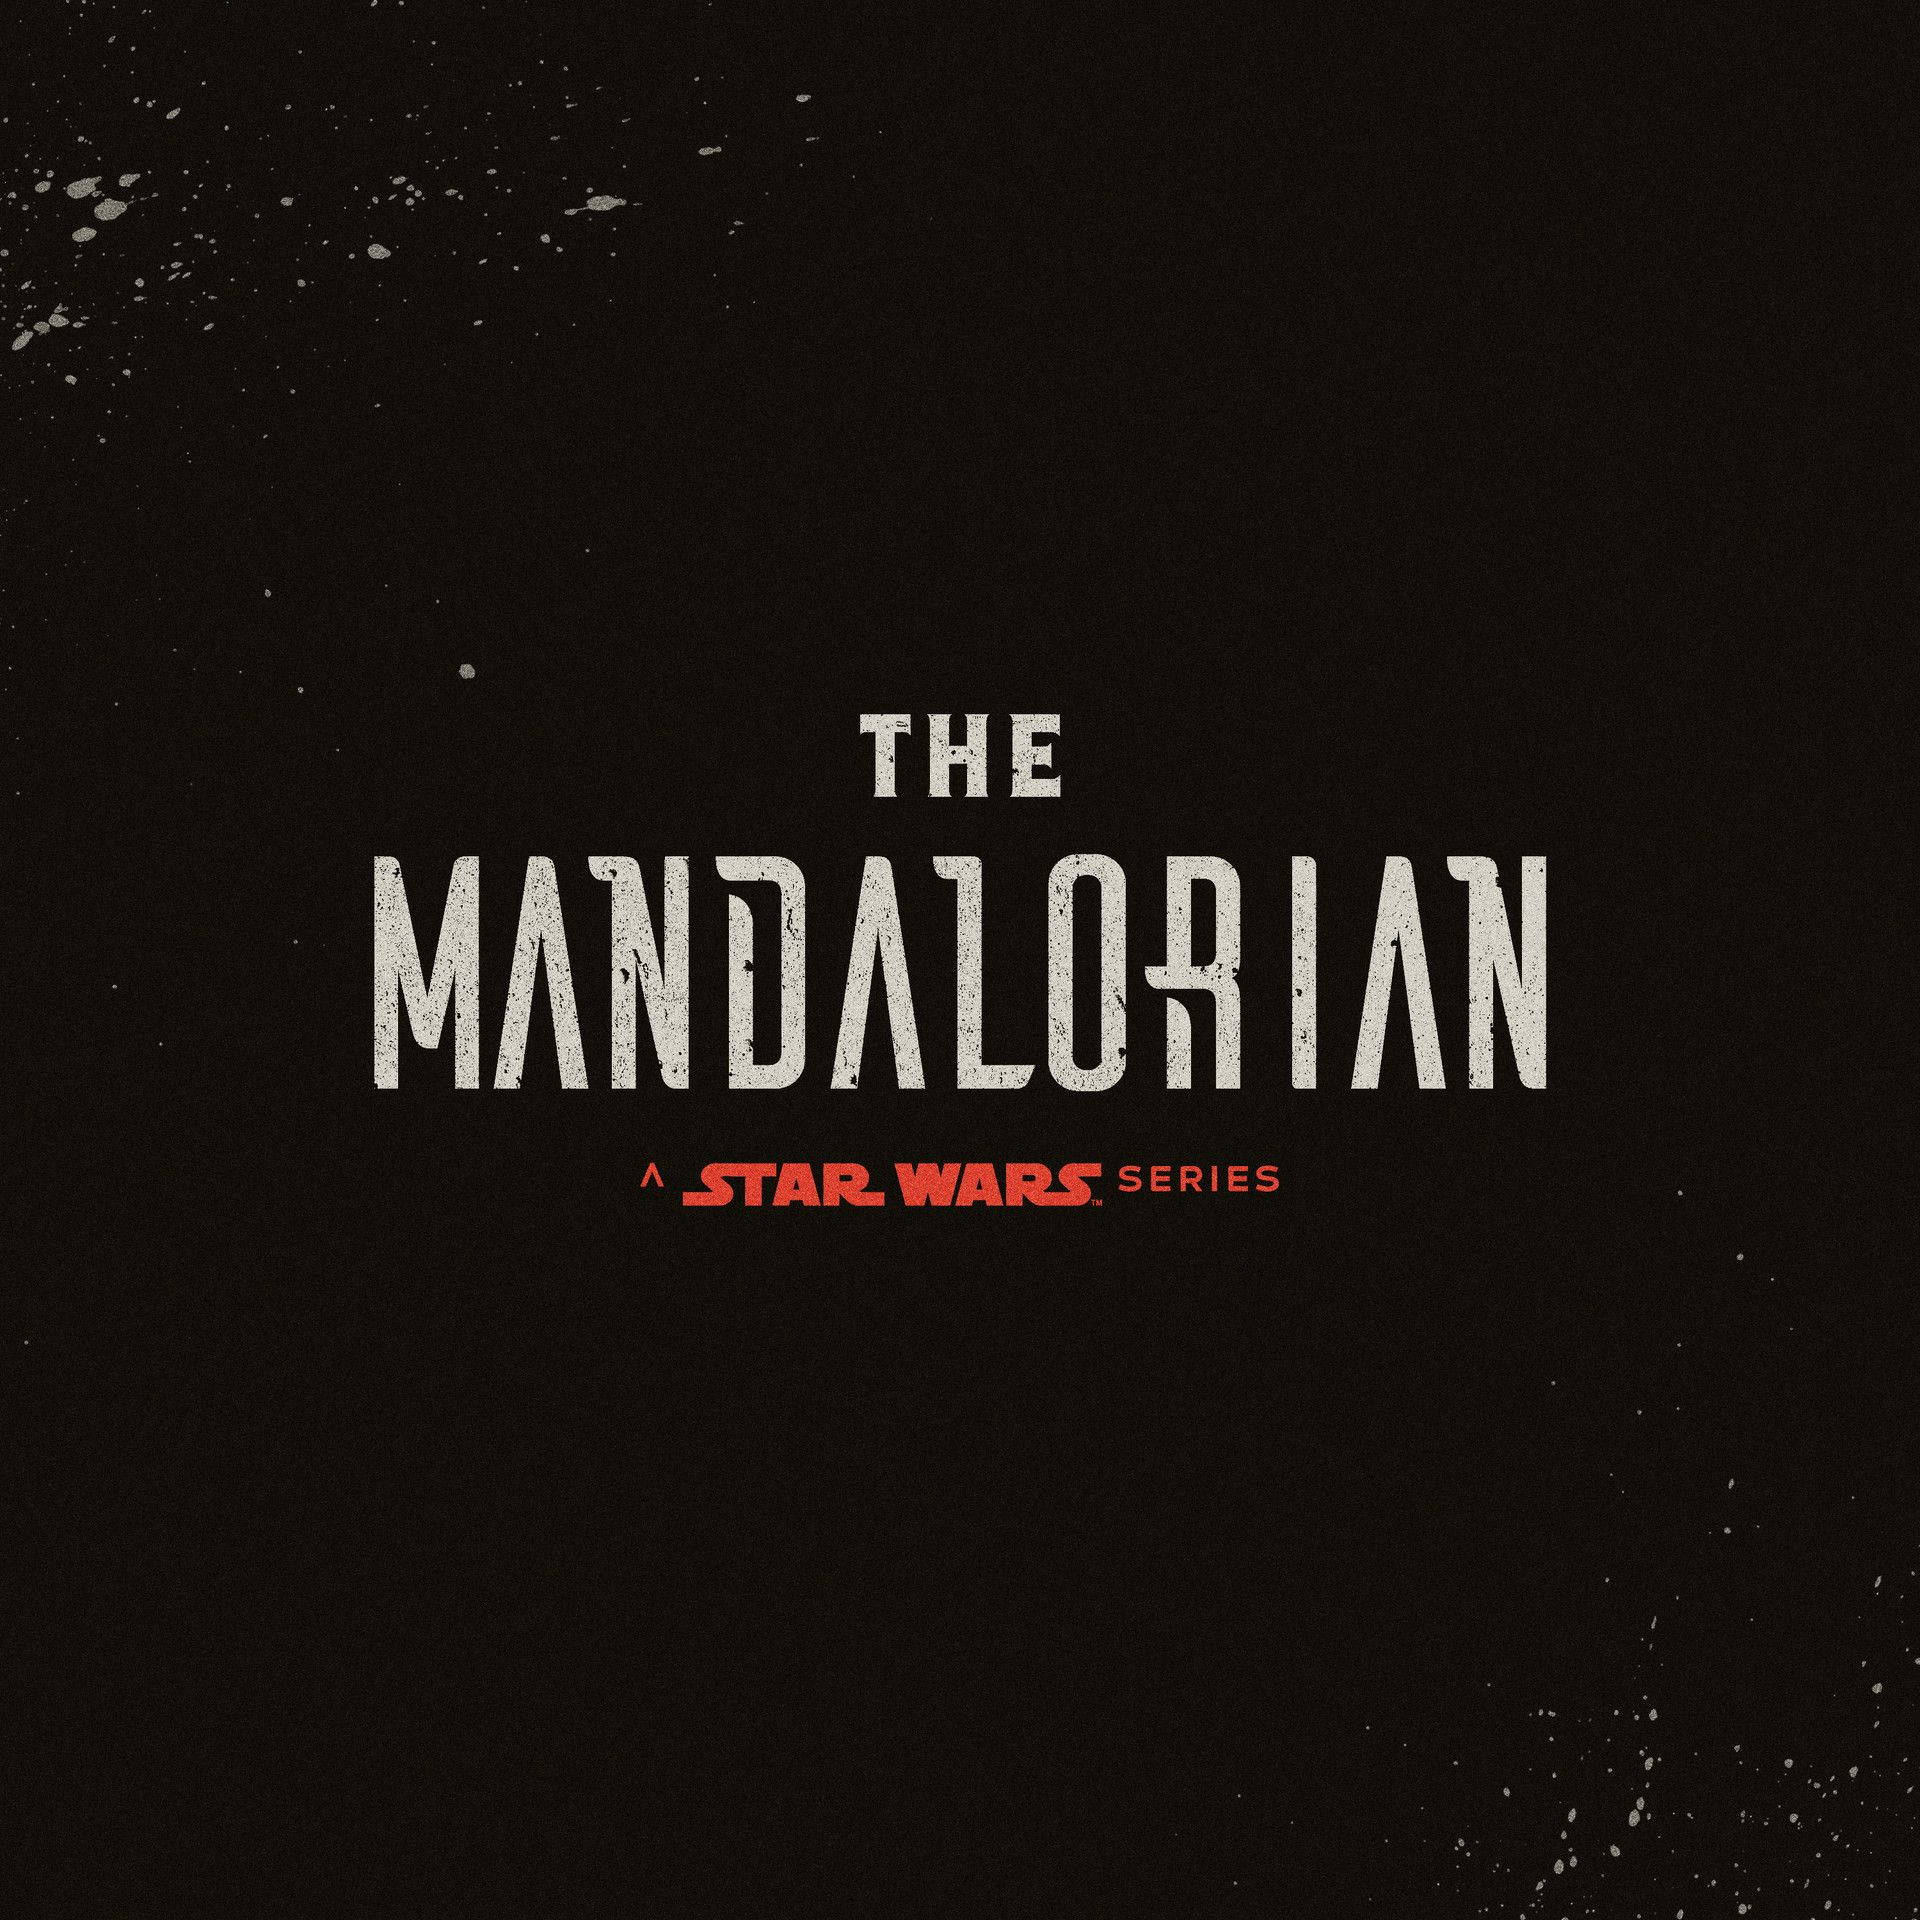 The Mandalorian Star Wars Series Logo Background